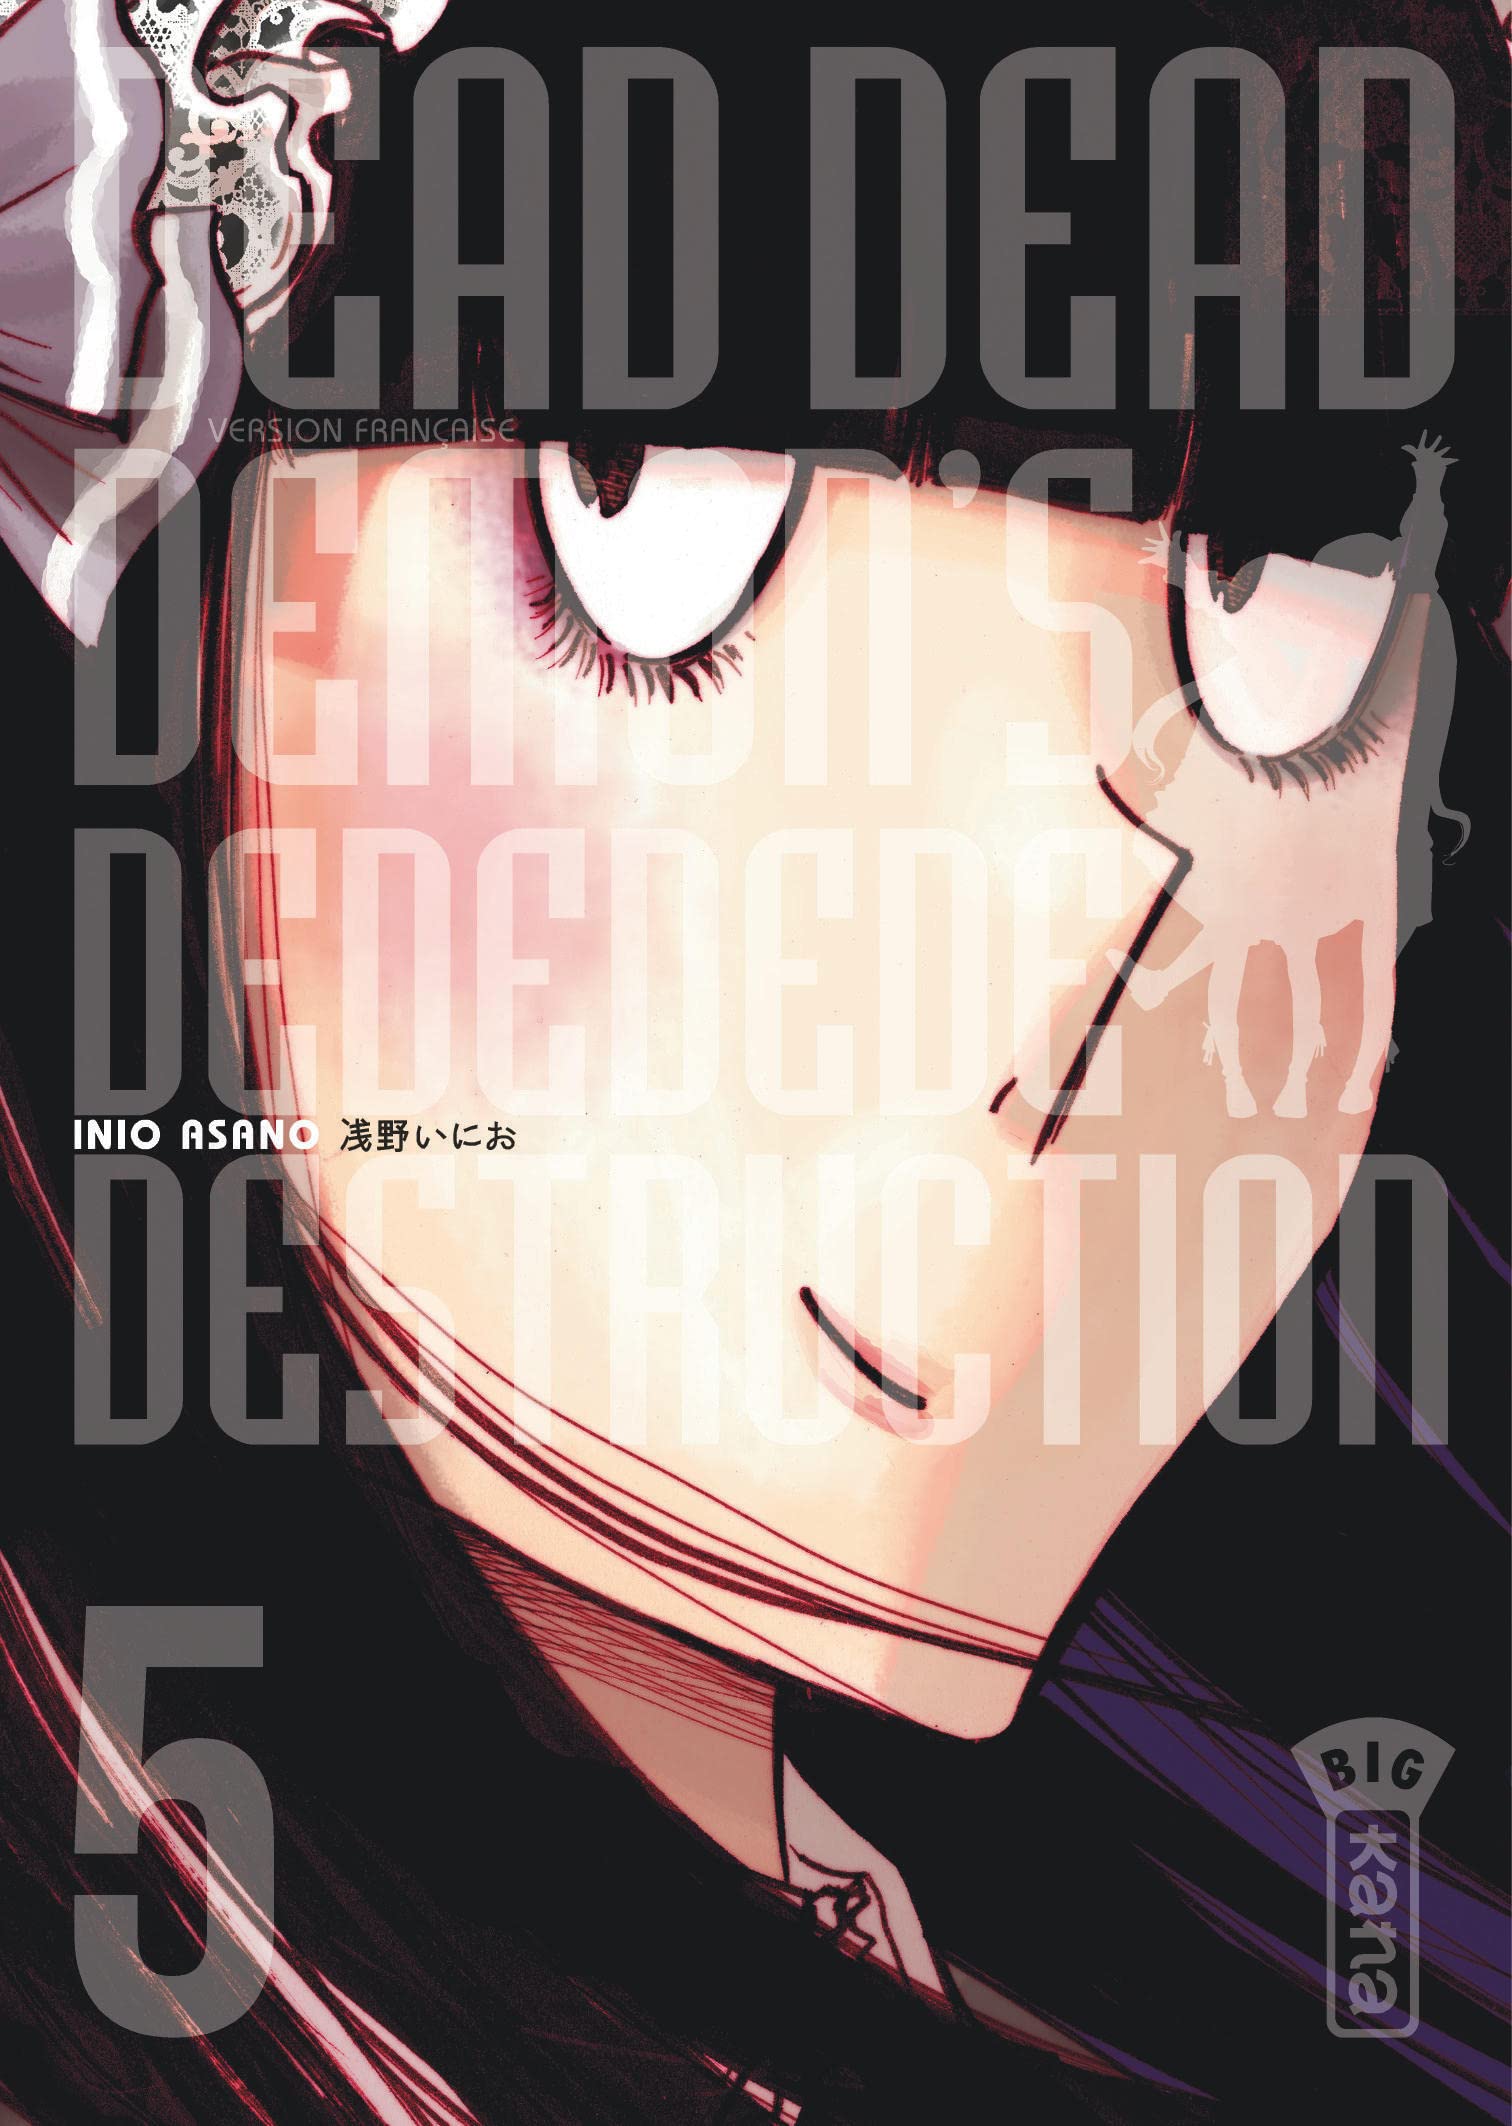 Dead Dead Demon's Dededede Destruction cover 15